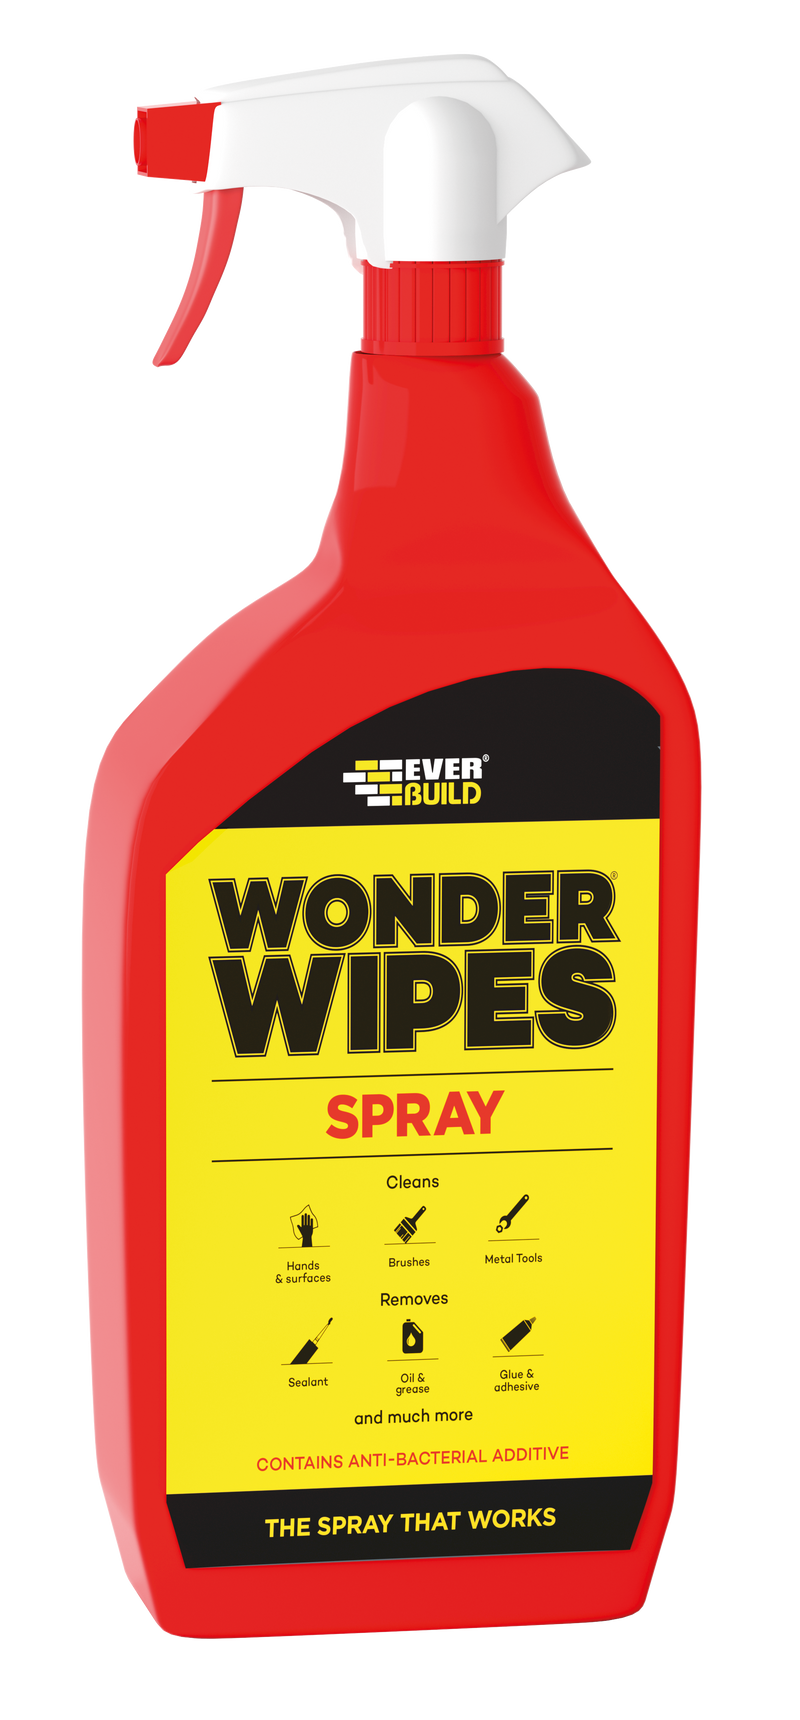 Big Wipes - Heavy Duty Cleaning Spray - 1ltr